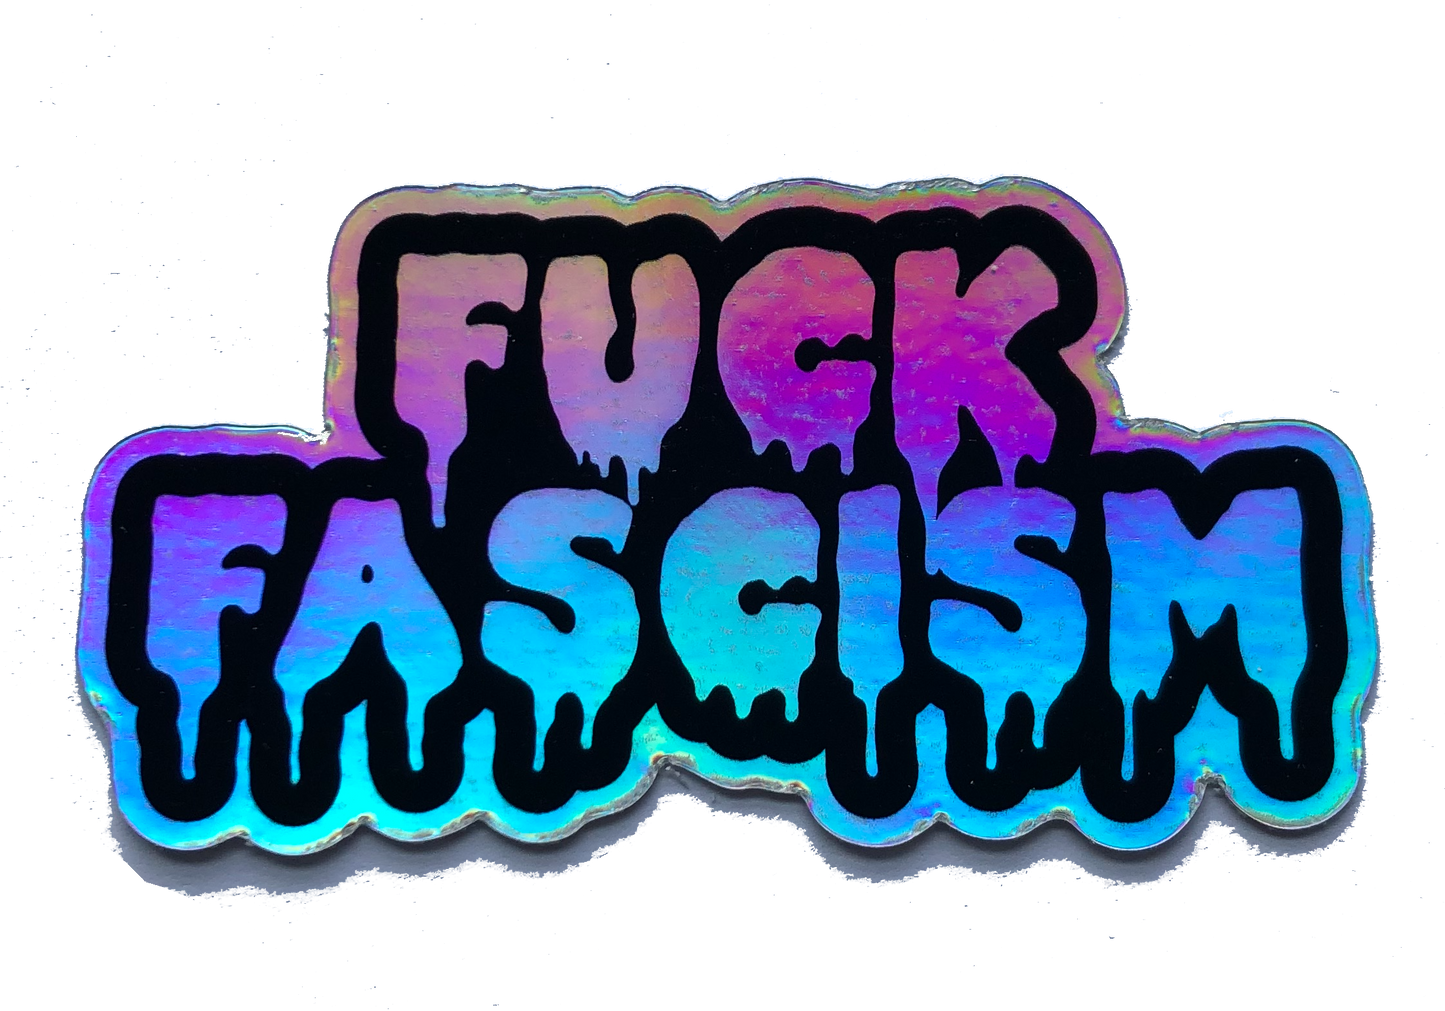 Holographic Fuck Fascism Vinyl Sticker